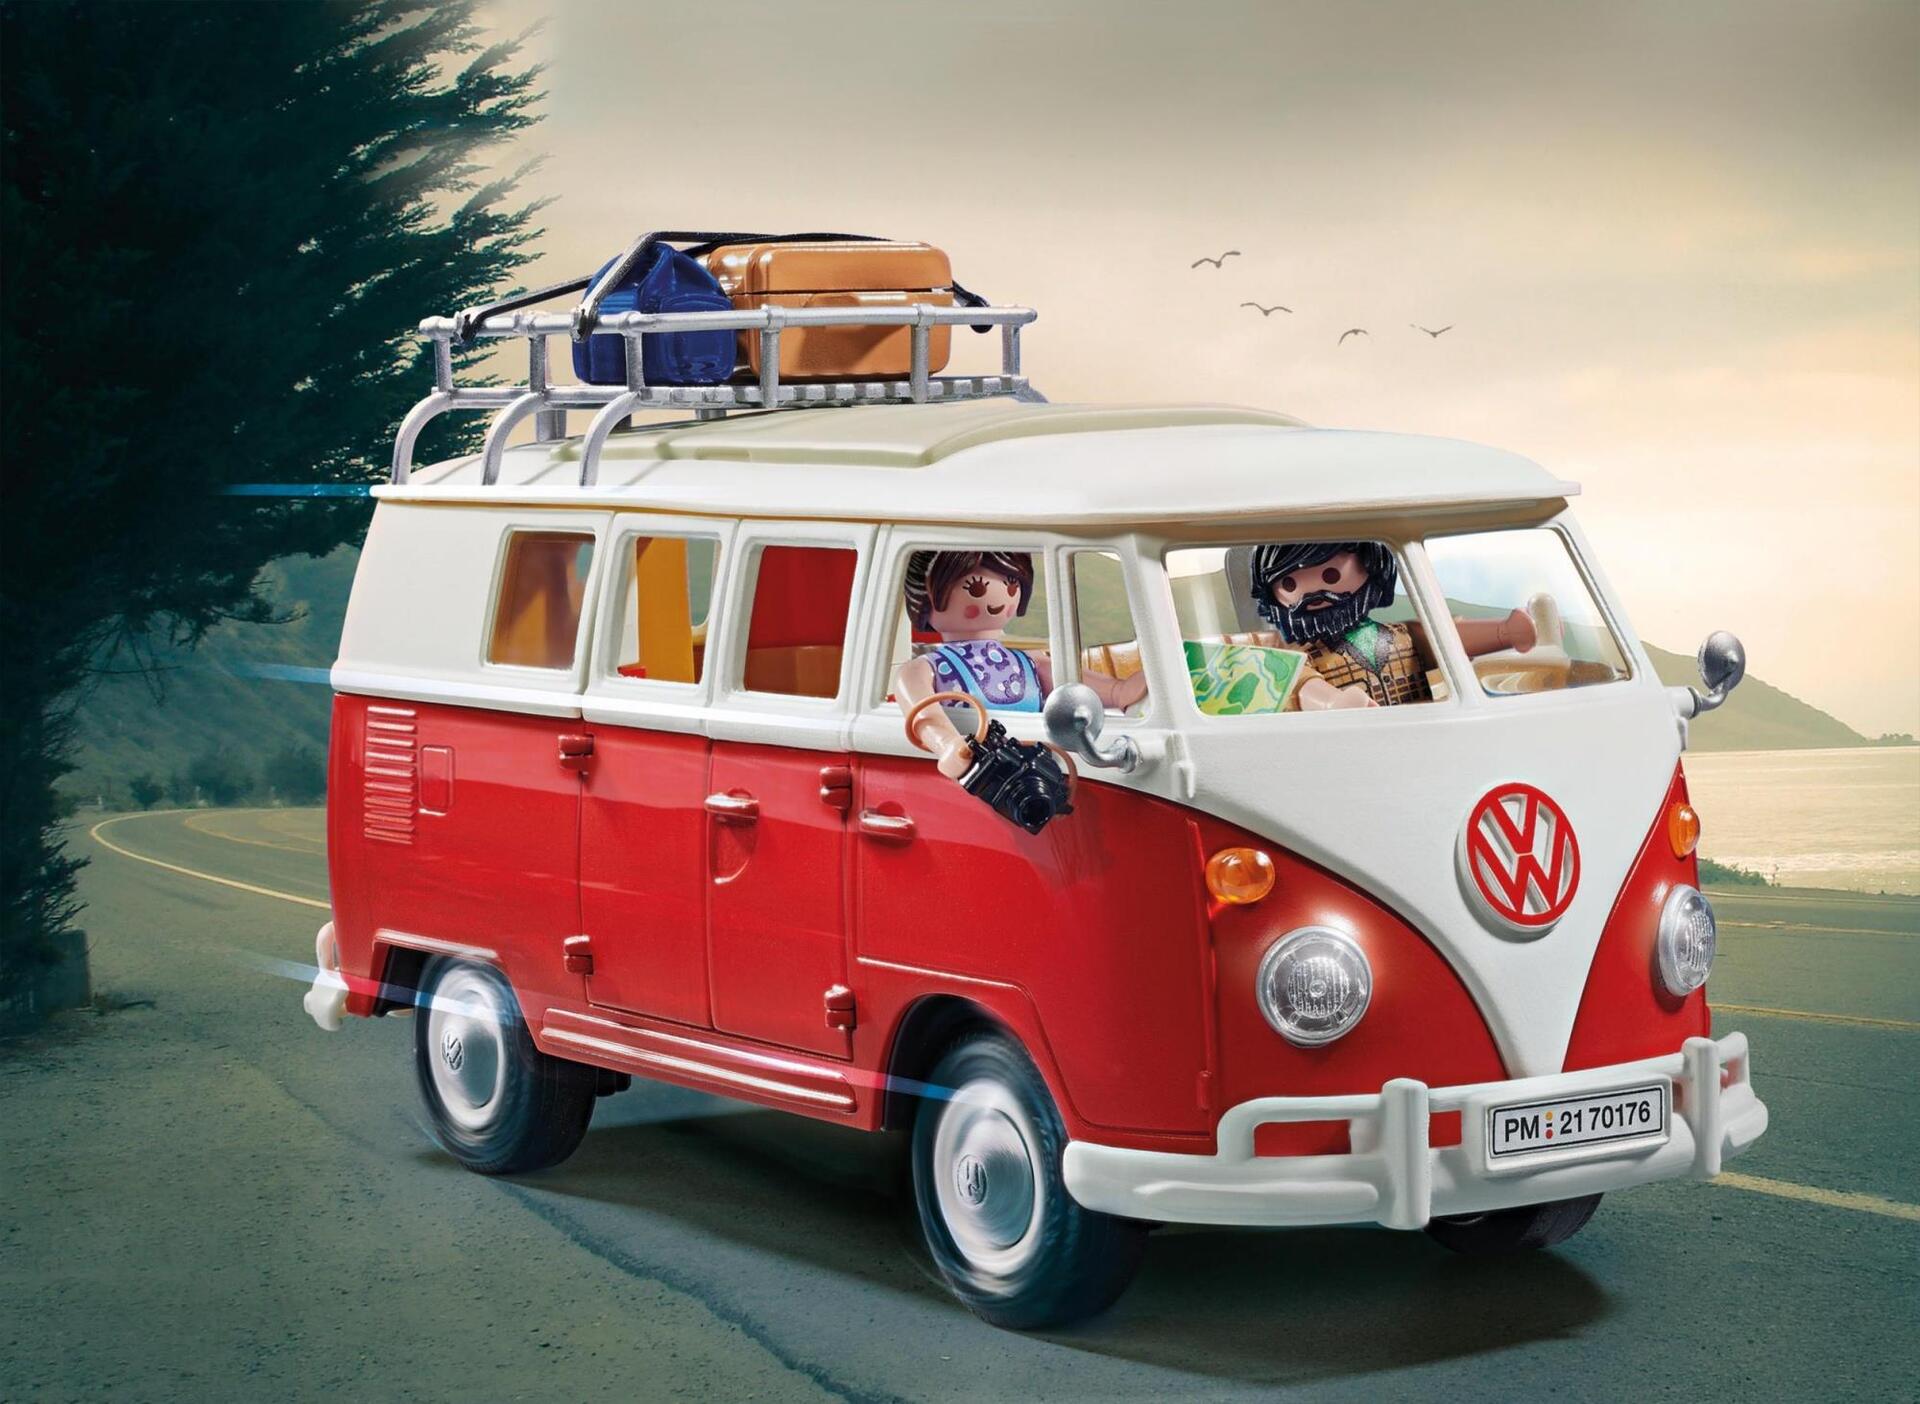 Playmobil Volkswagen T1 Camping Bus - Bus - 4 Jahr(e) - Kunststoff - Mehrfarben (70176)